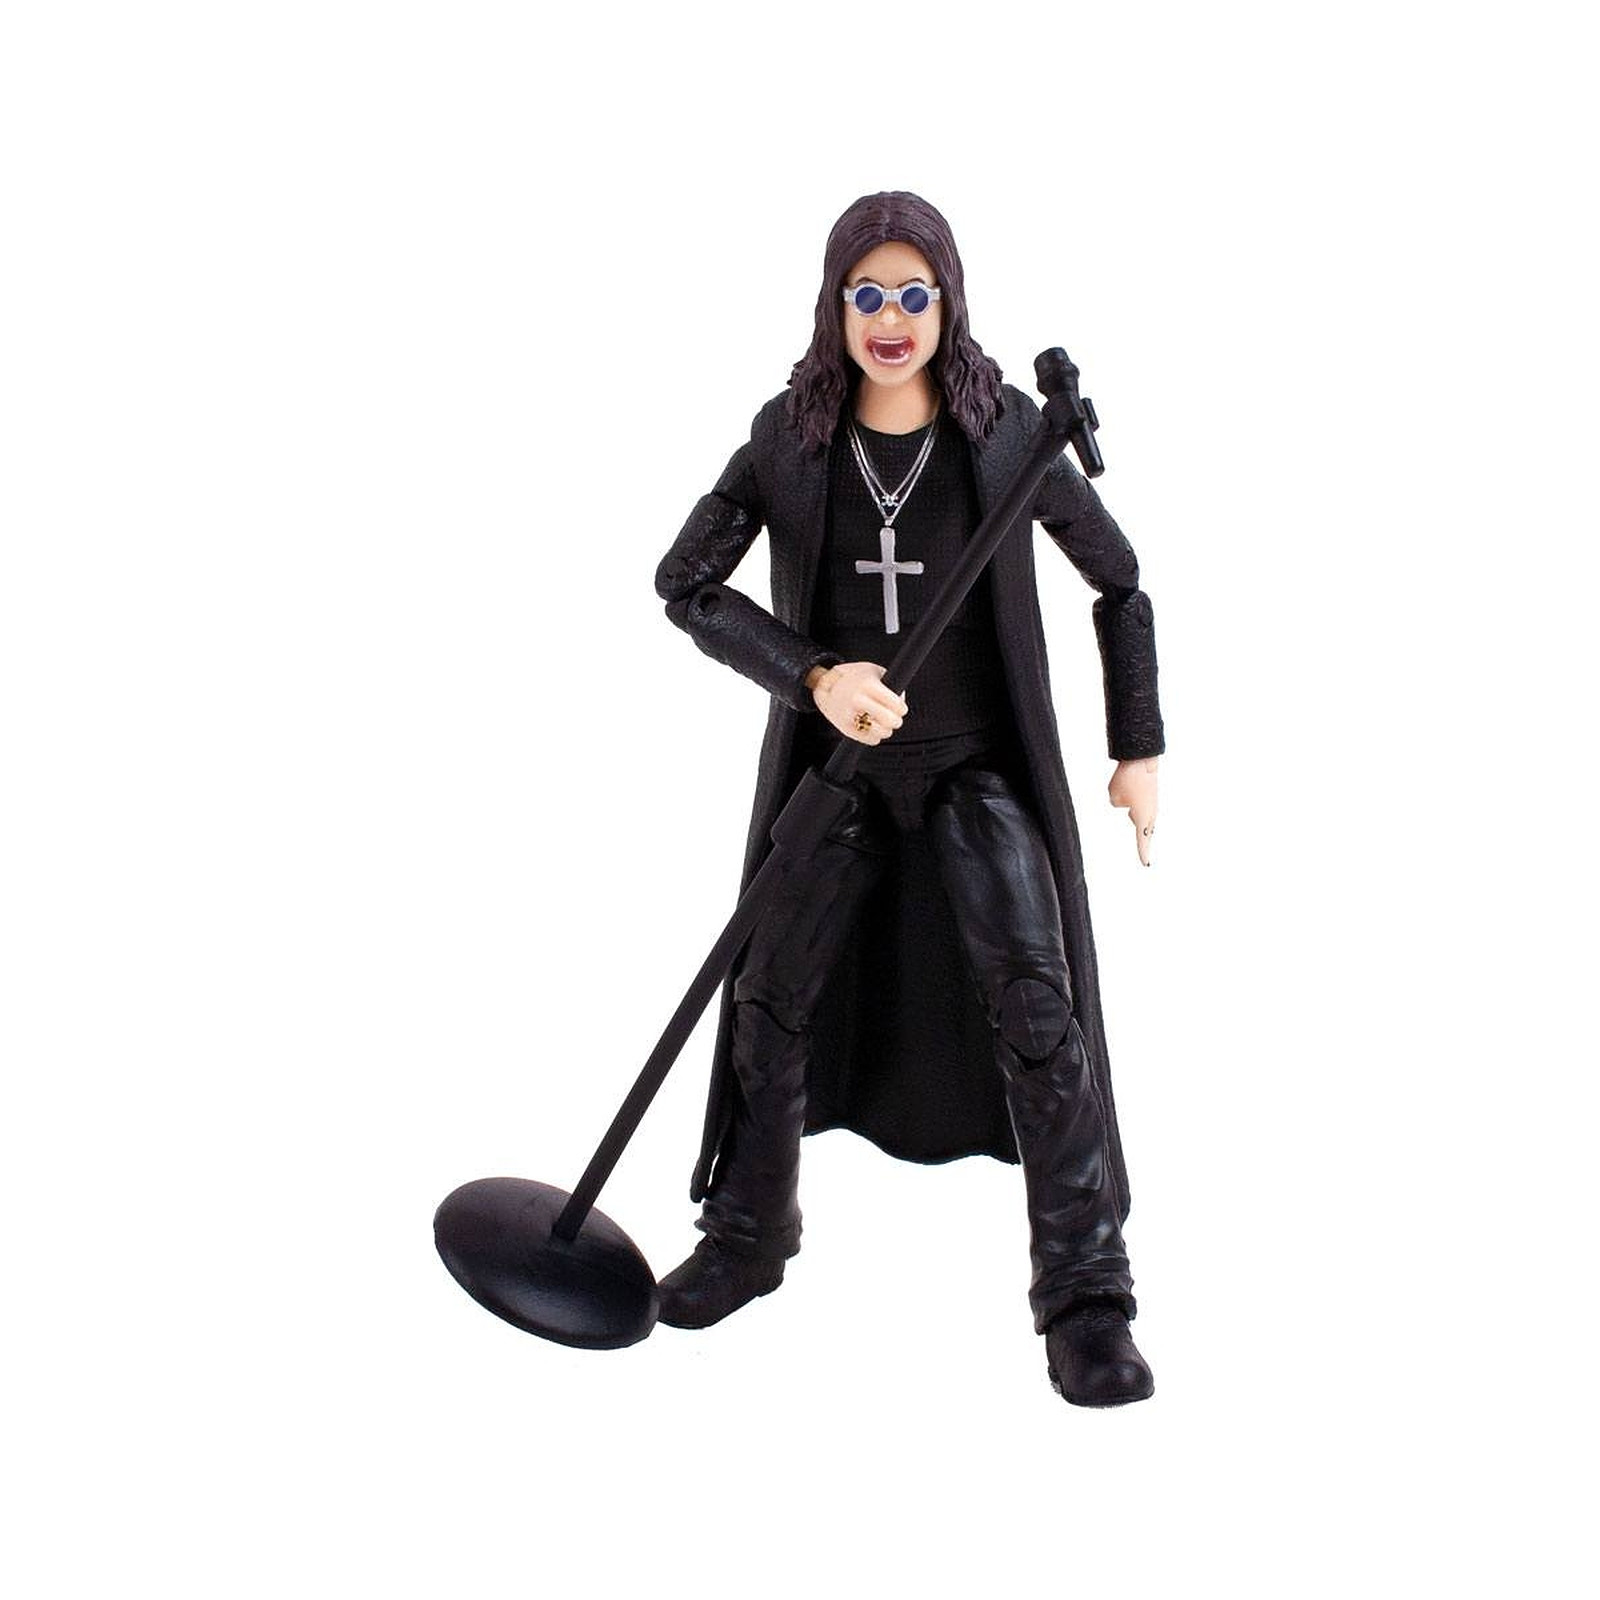 Ozzy Osbourne - Figurine BST AXN 13 cm - Figurines The Loyal Subjects